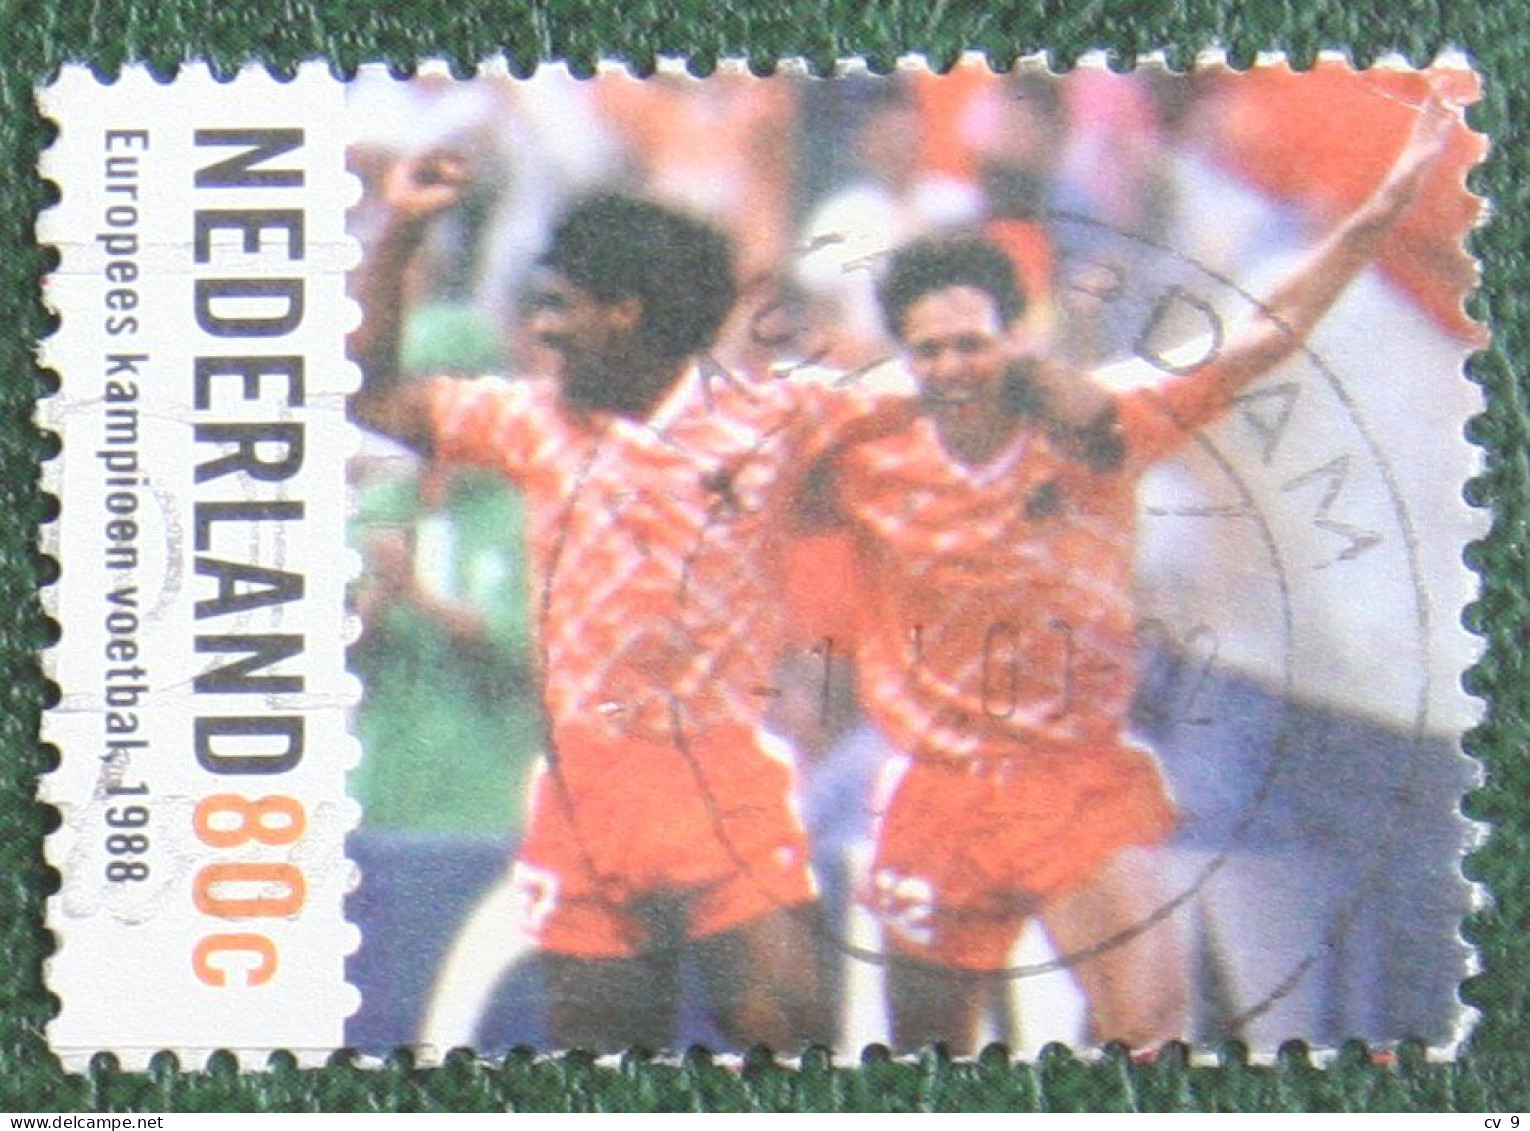 Hoogtepunten Uit De 20e Eeuw Soccer Football EK 88 NVPH 1848 (Mi 1746) 1999 Gestempeld / Used NEDERLAND / NIEDERLANDE - Used Stamps